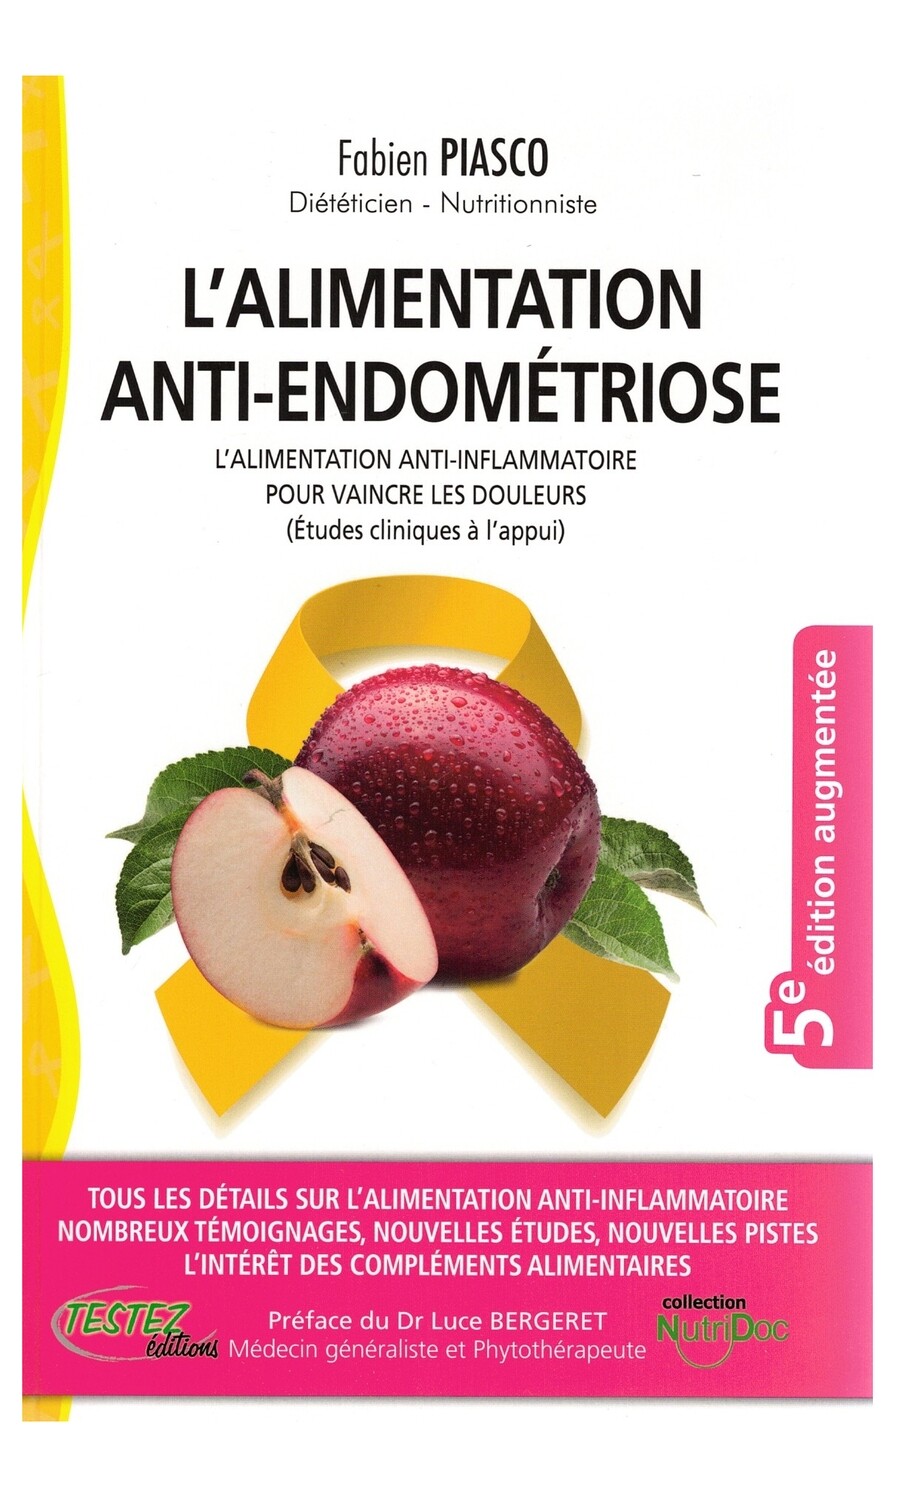 L'alimentation anti-endometriose